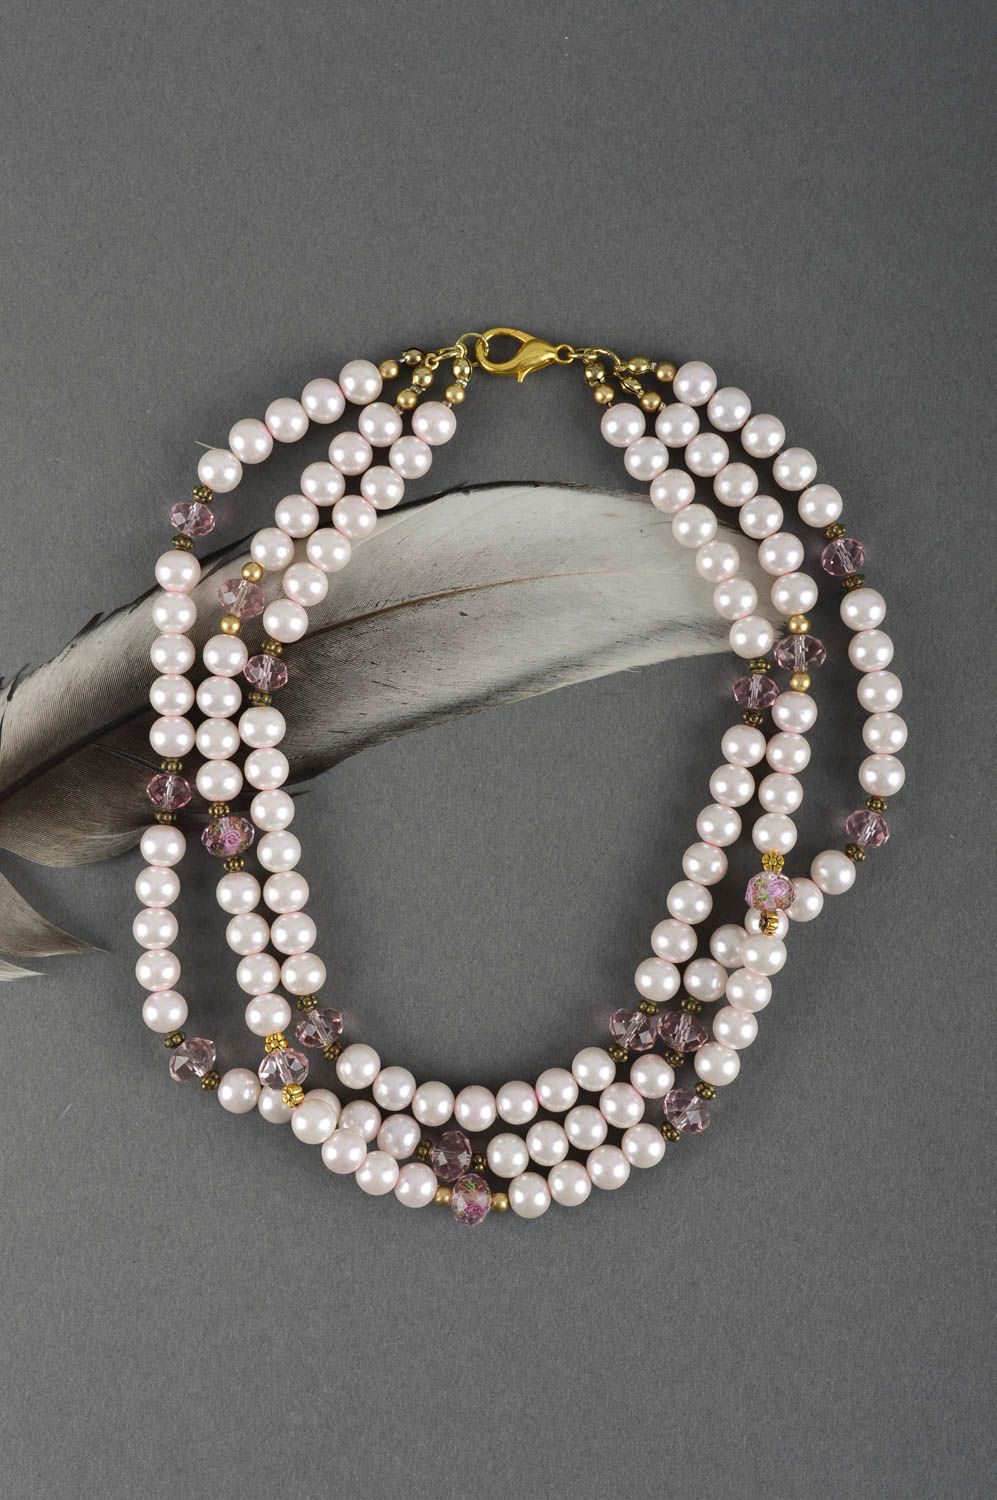 Handmade artificial pearls necklace unique designer jewelry accessory present photo 1